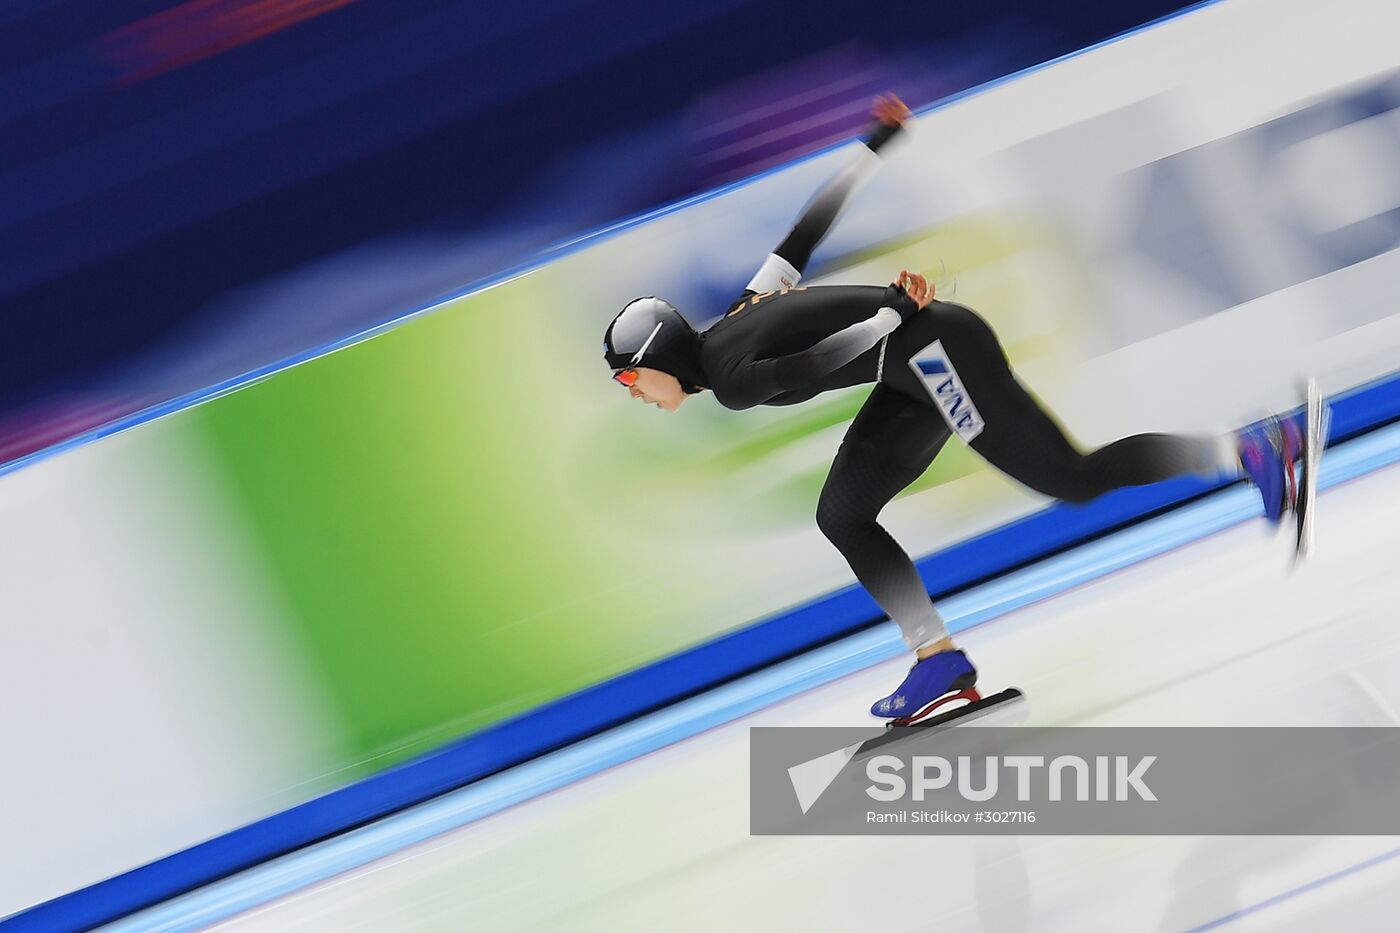 2017 World Single Distance Speed Skating Championships